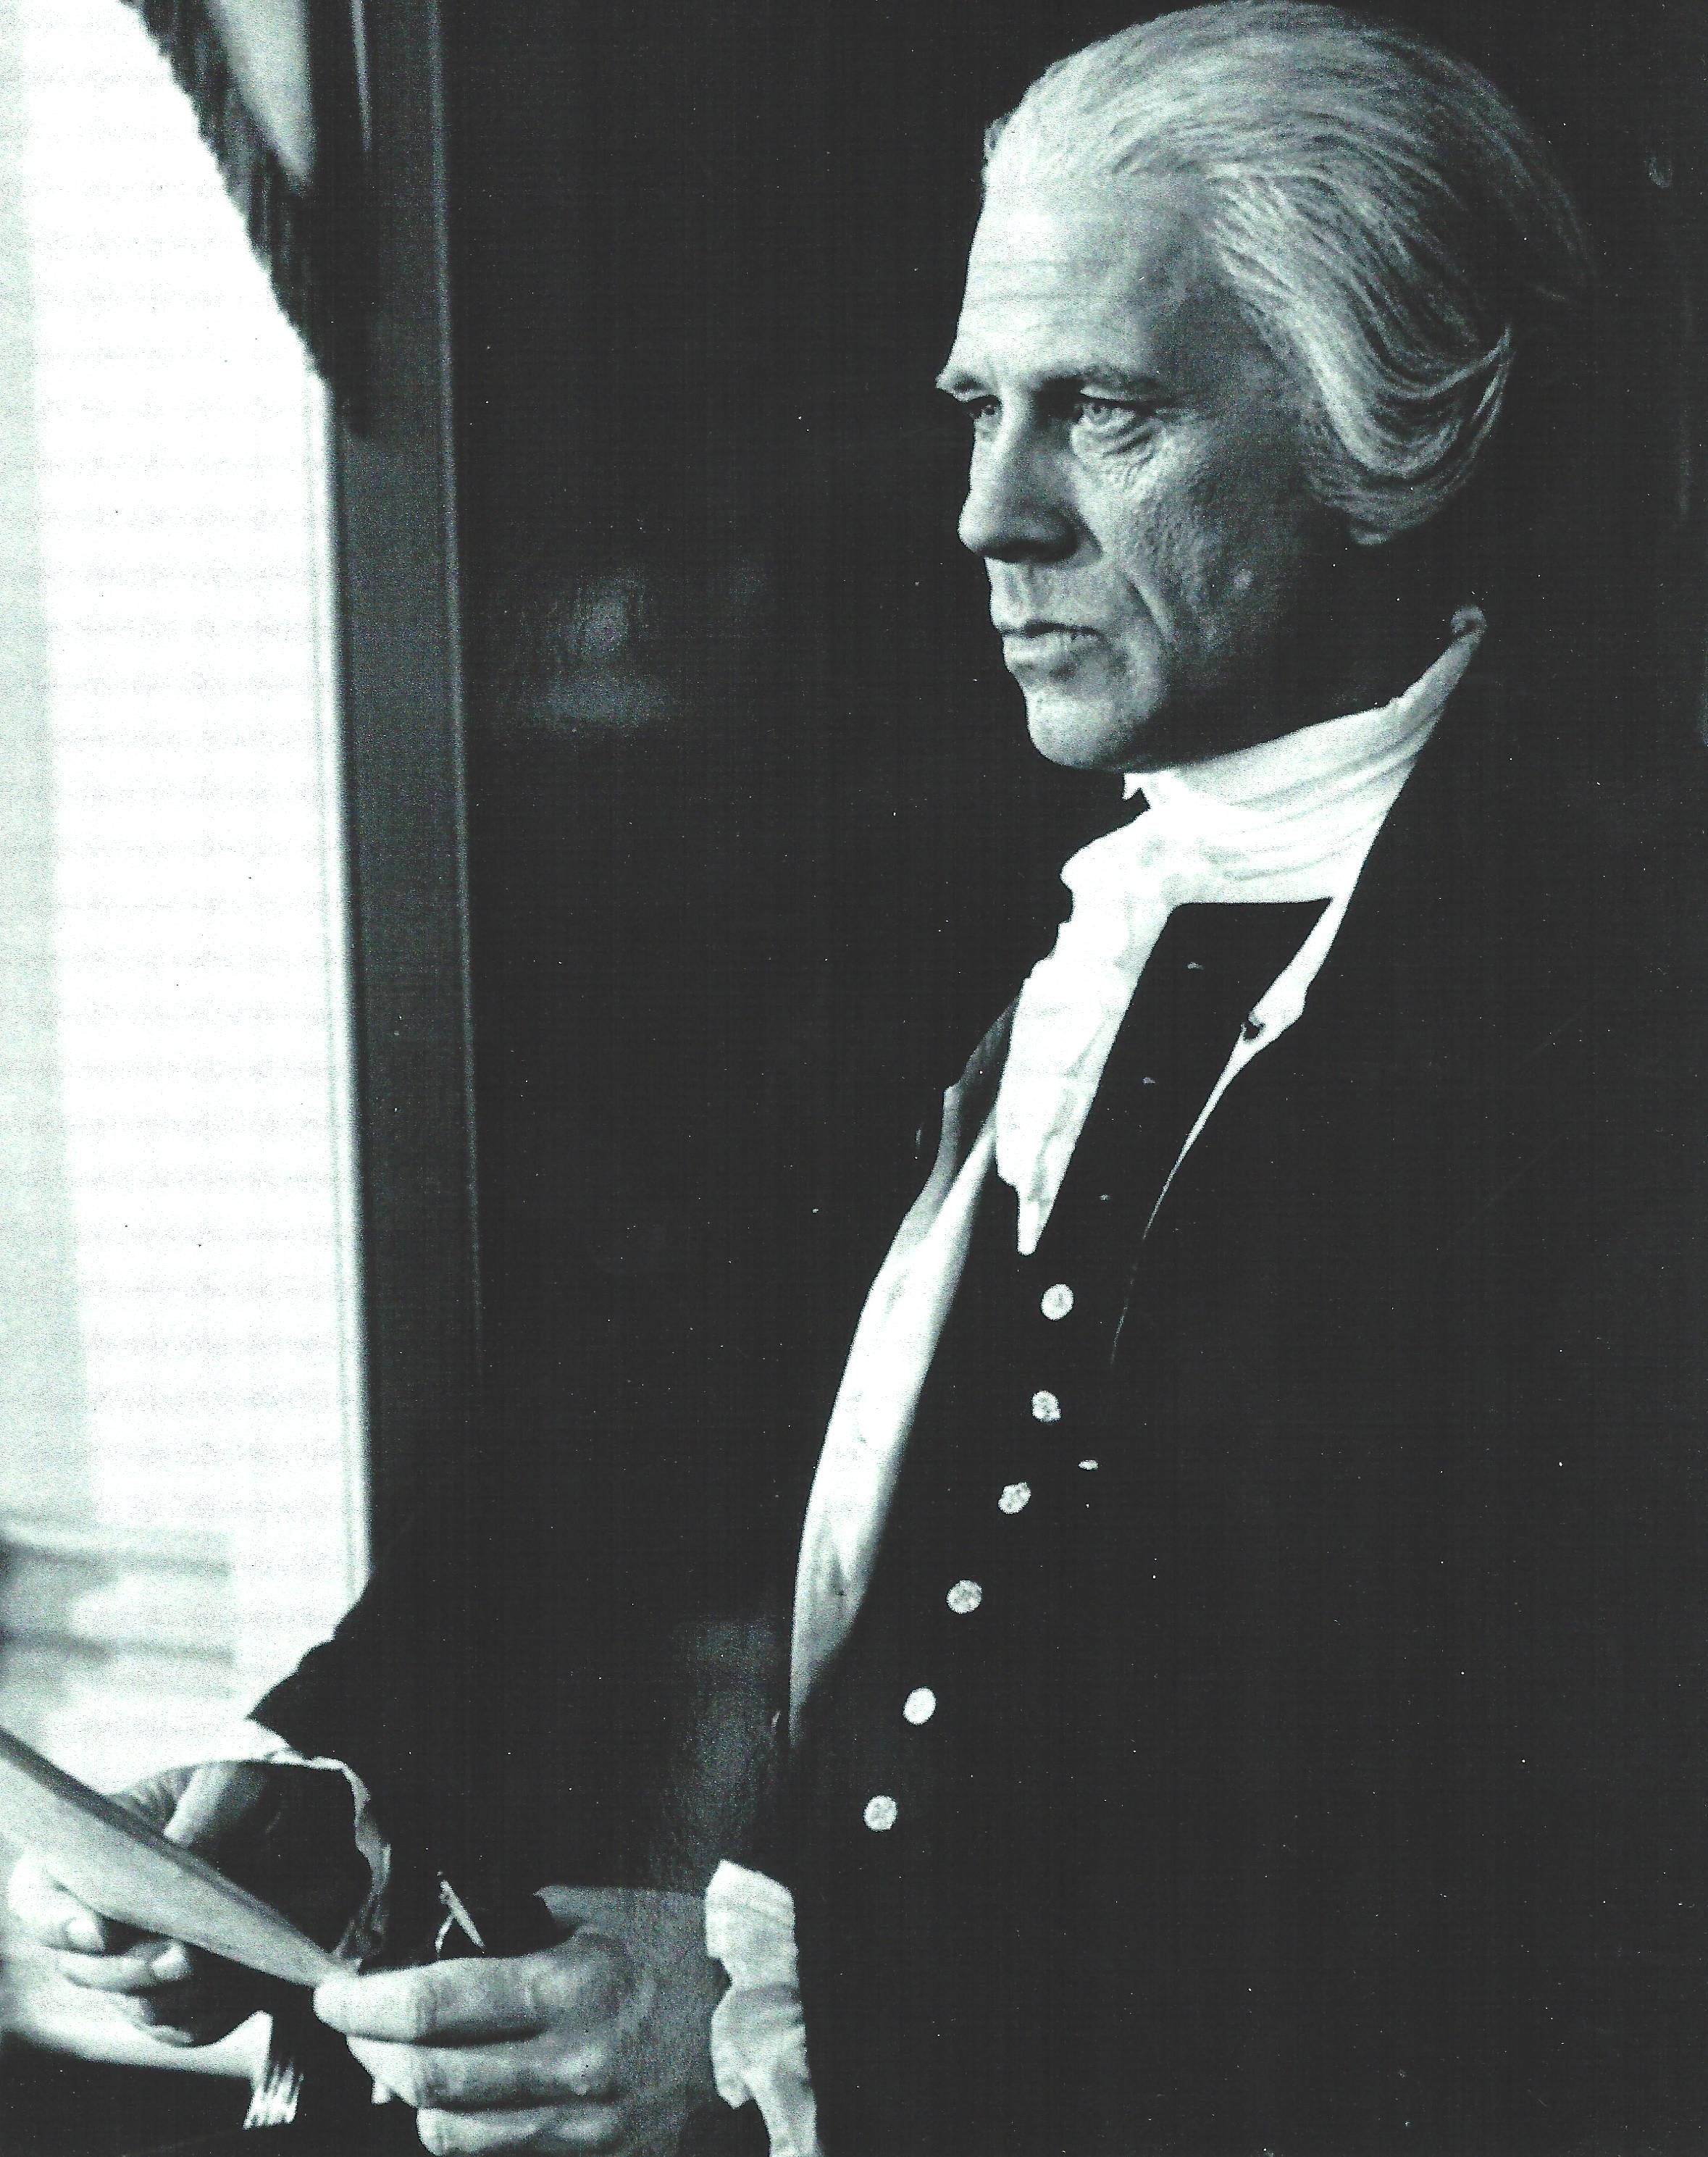 Barry Bostwick as George Washington